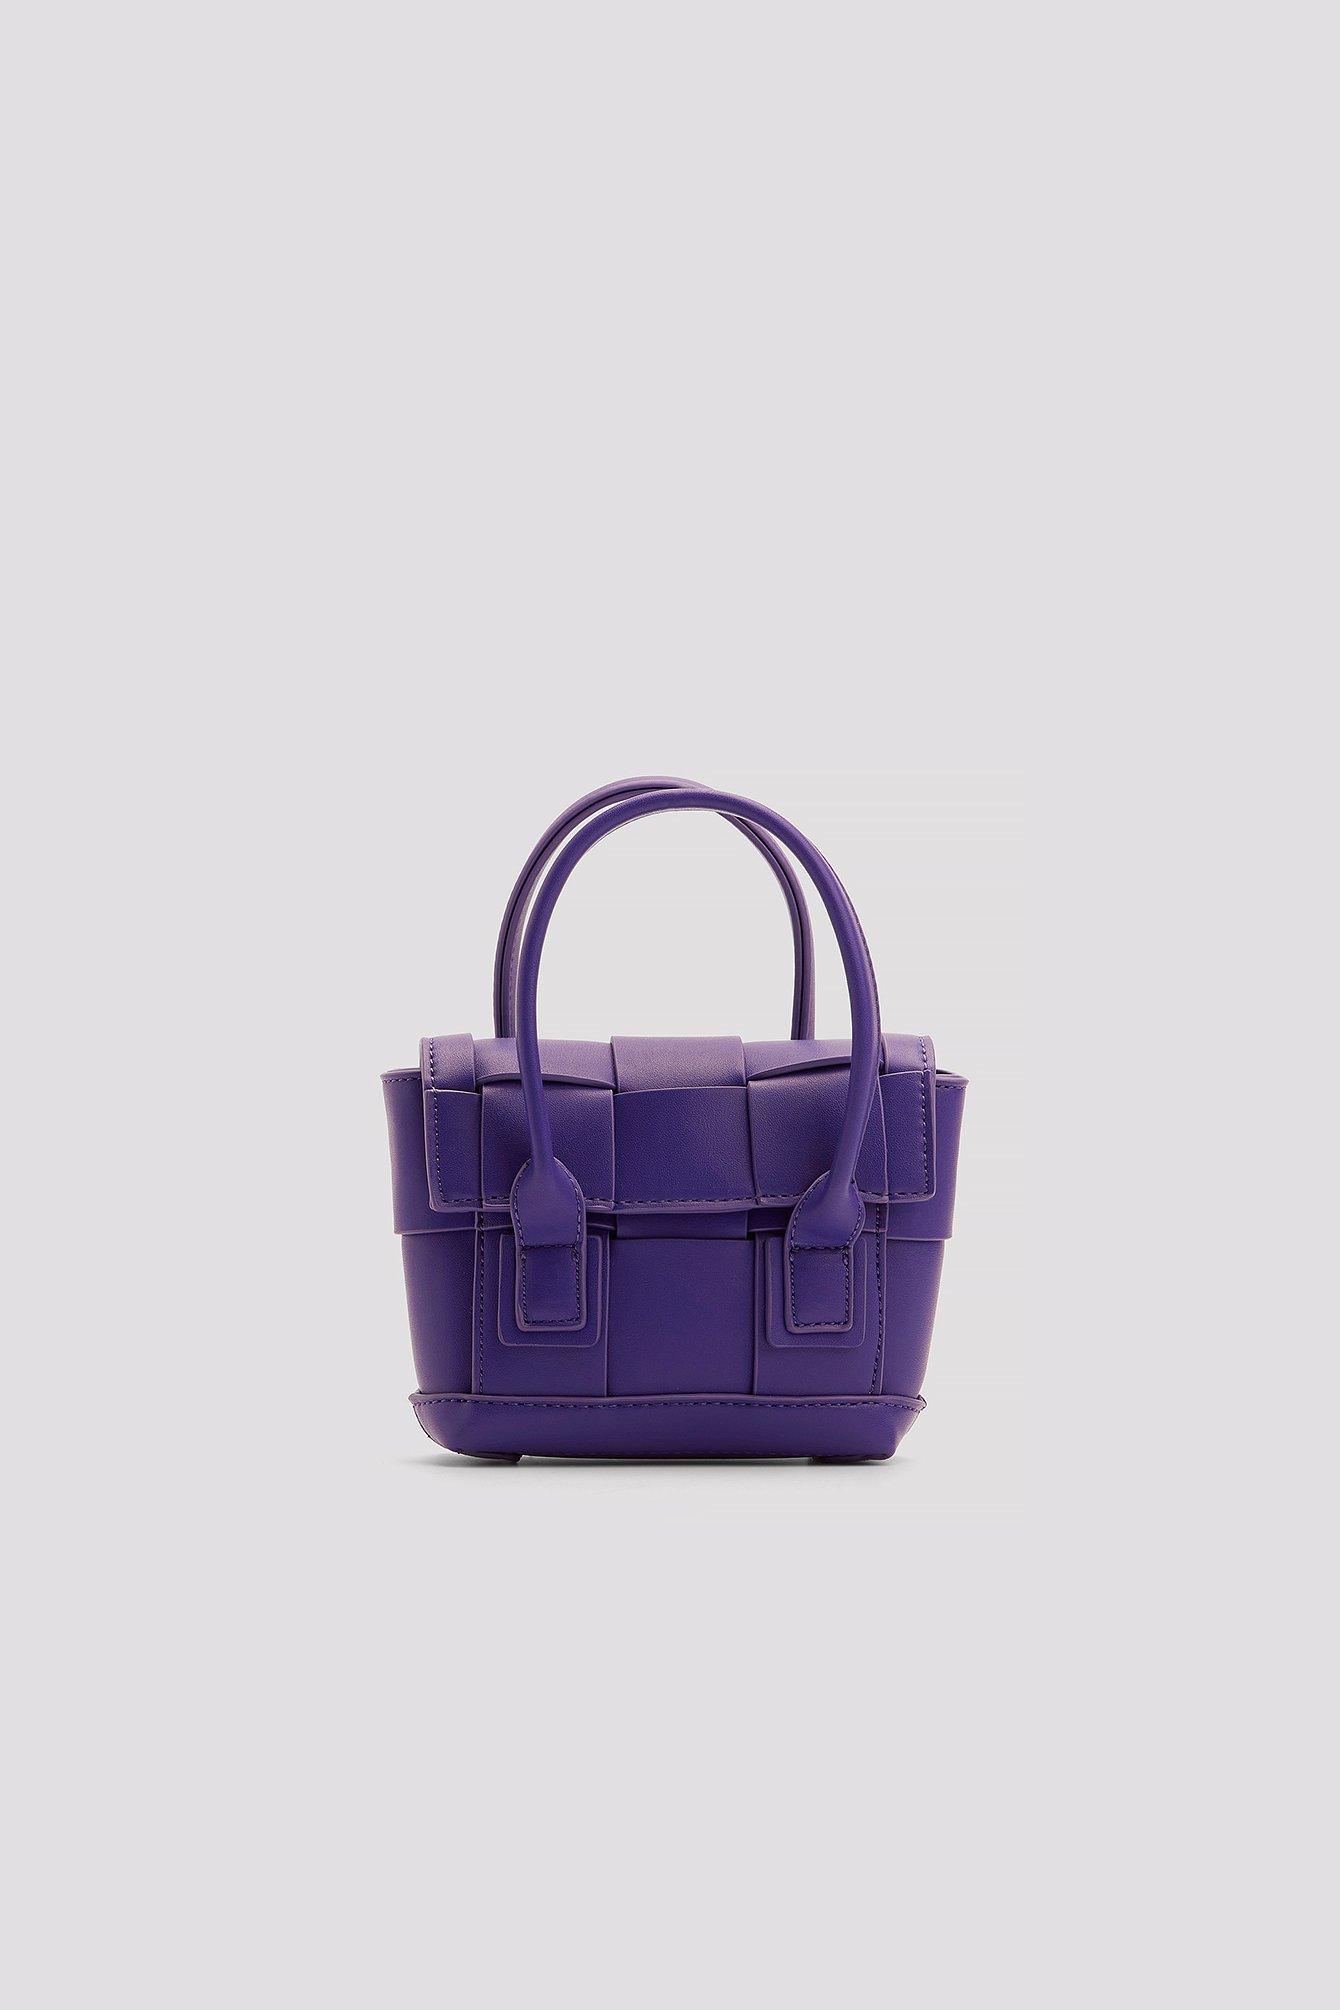 Purple Boxy Woven Micro Bag